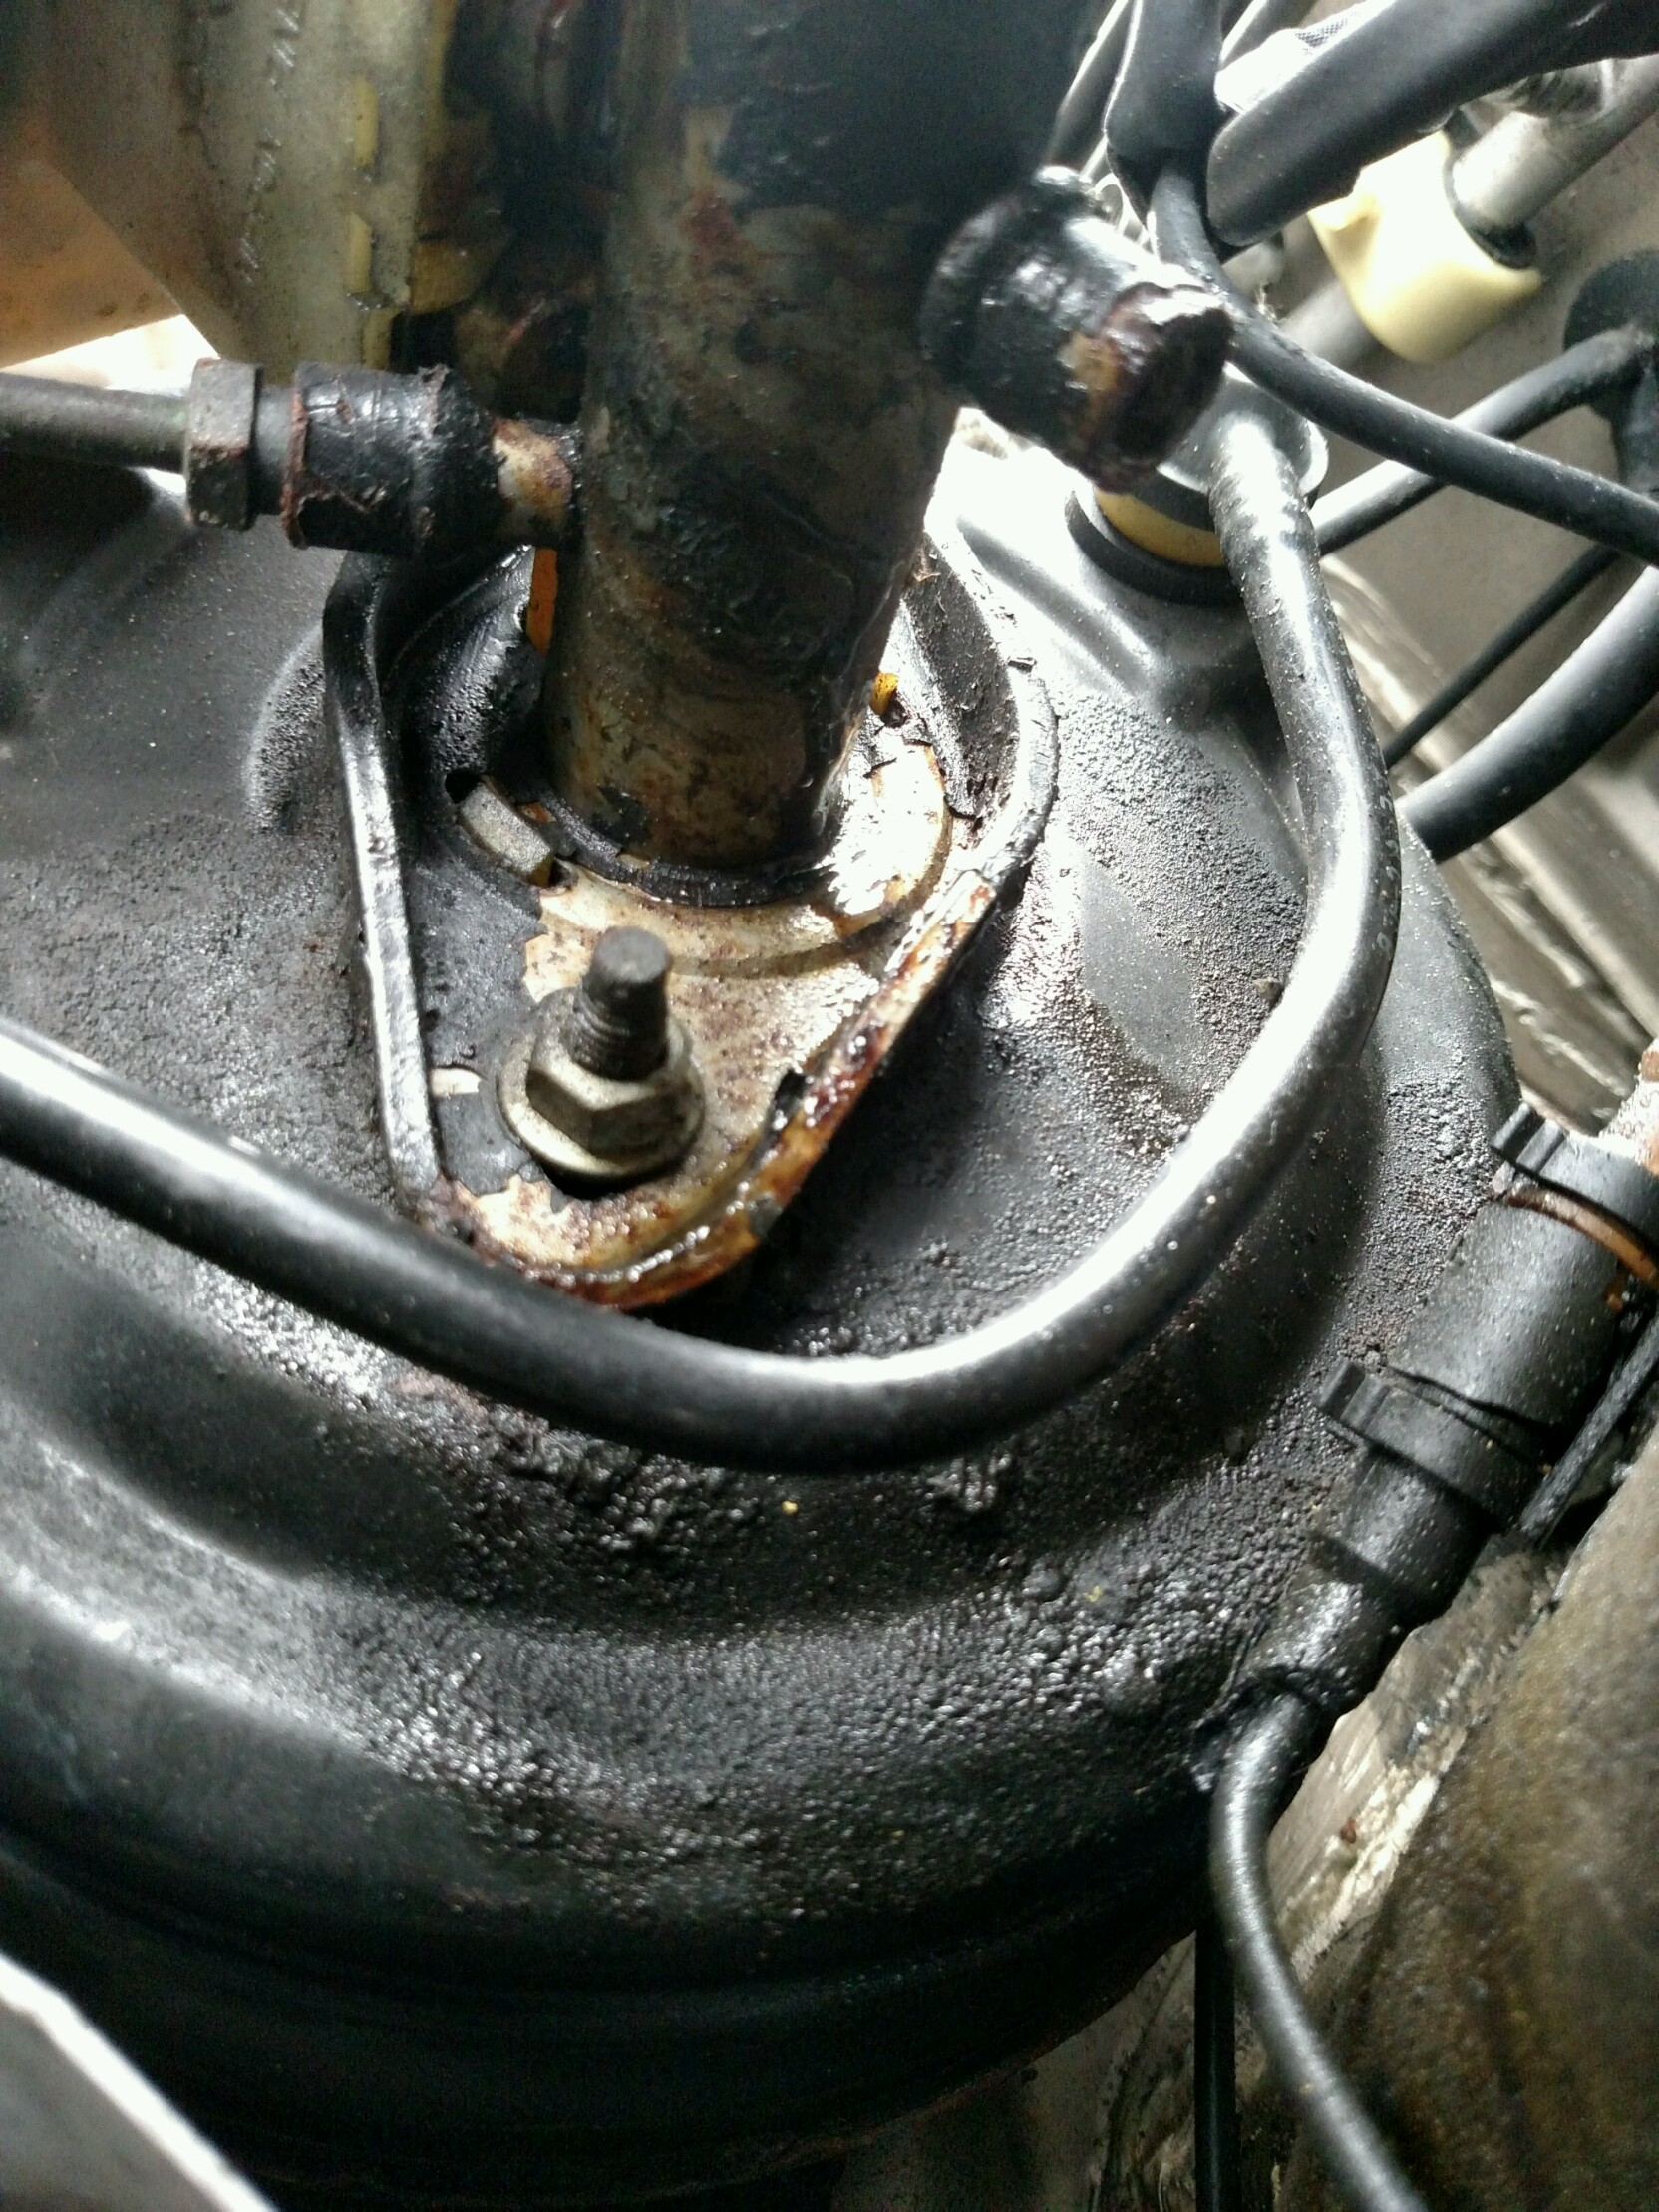 leaking brake fluid